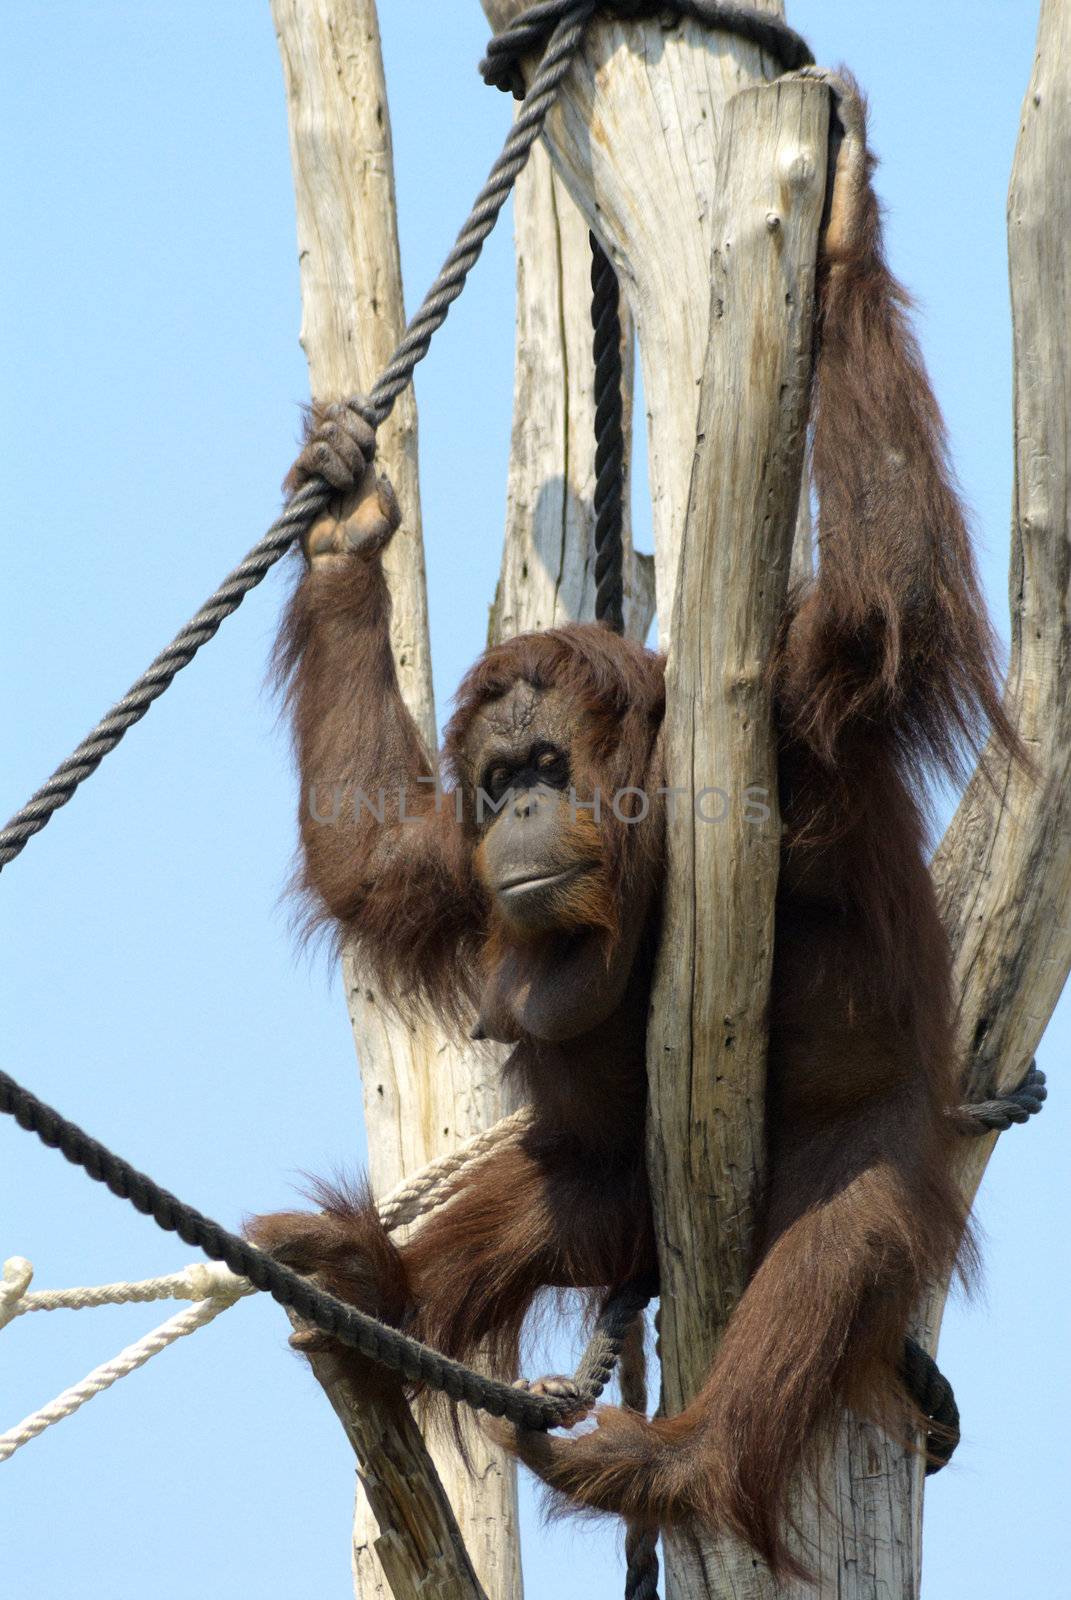 Orangutan by Kamensky